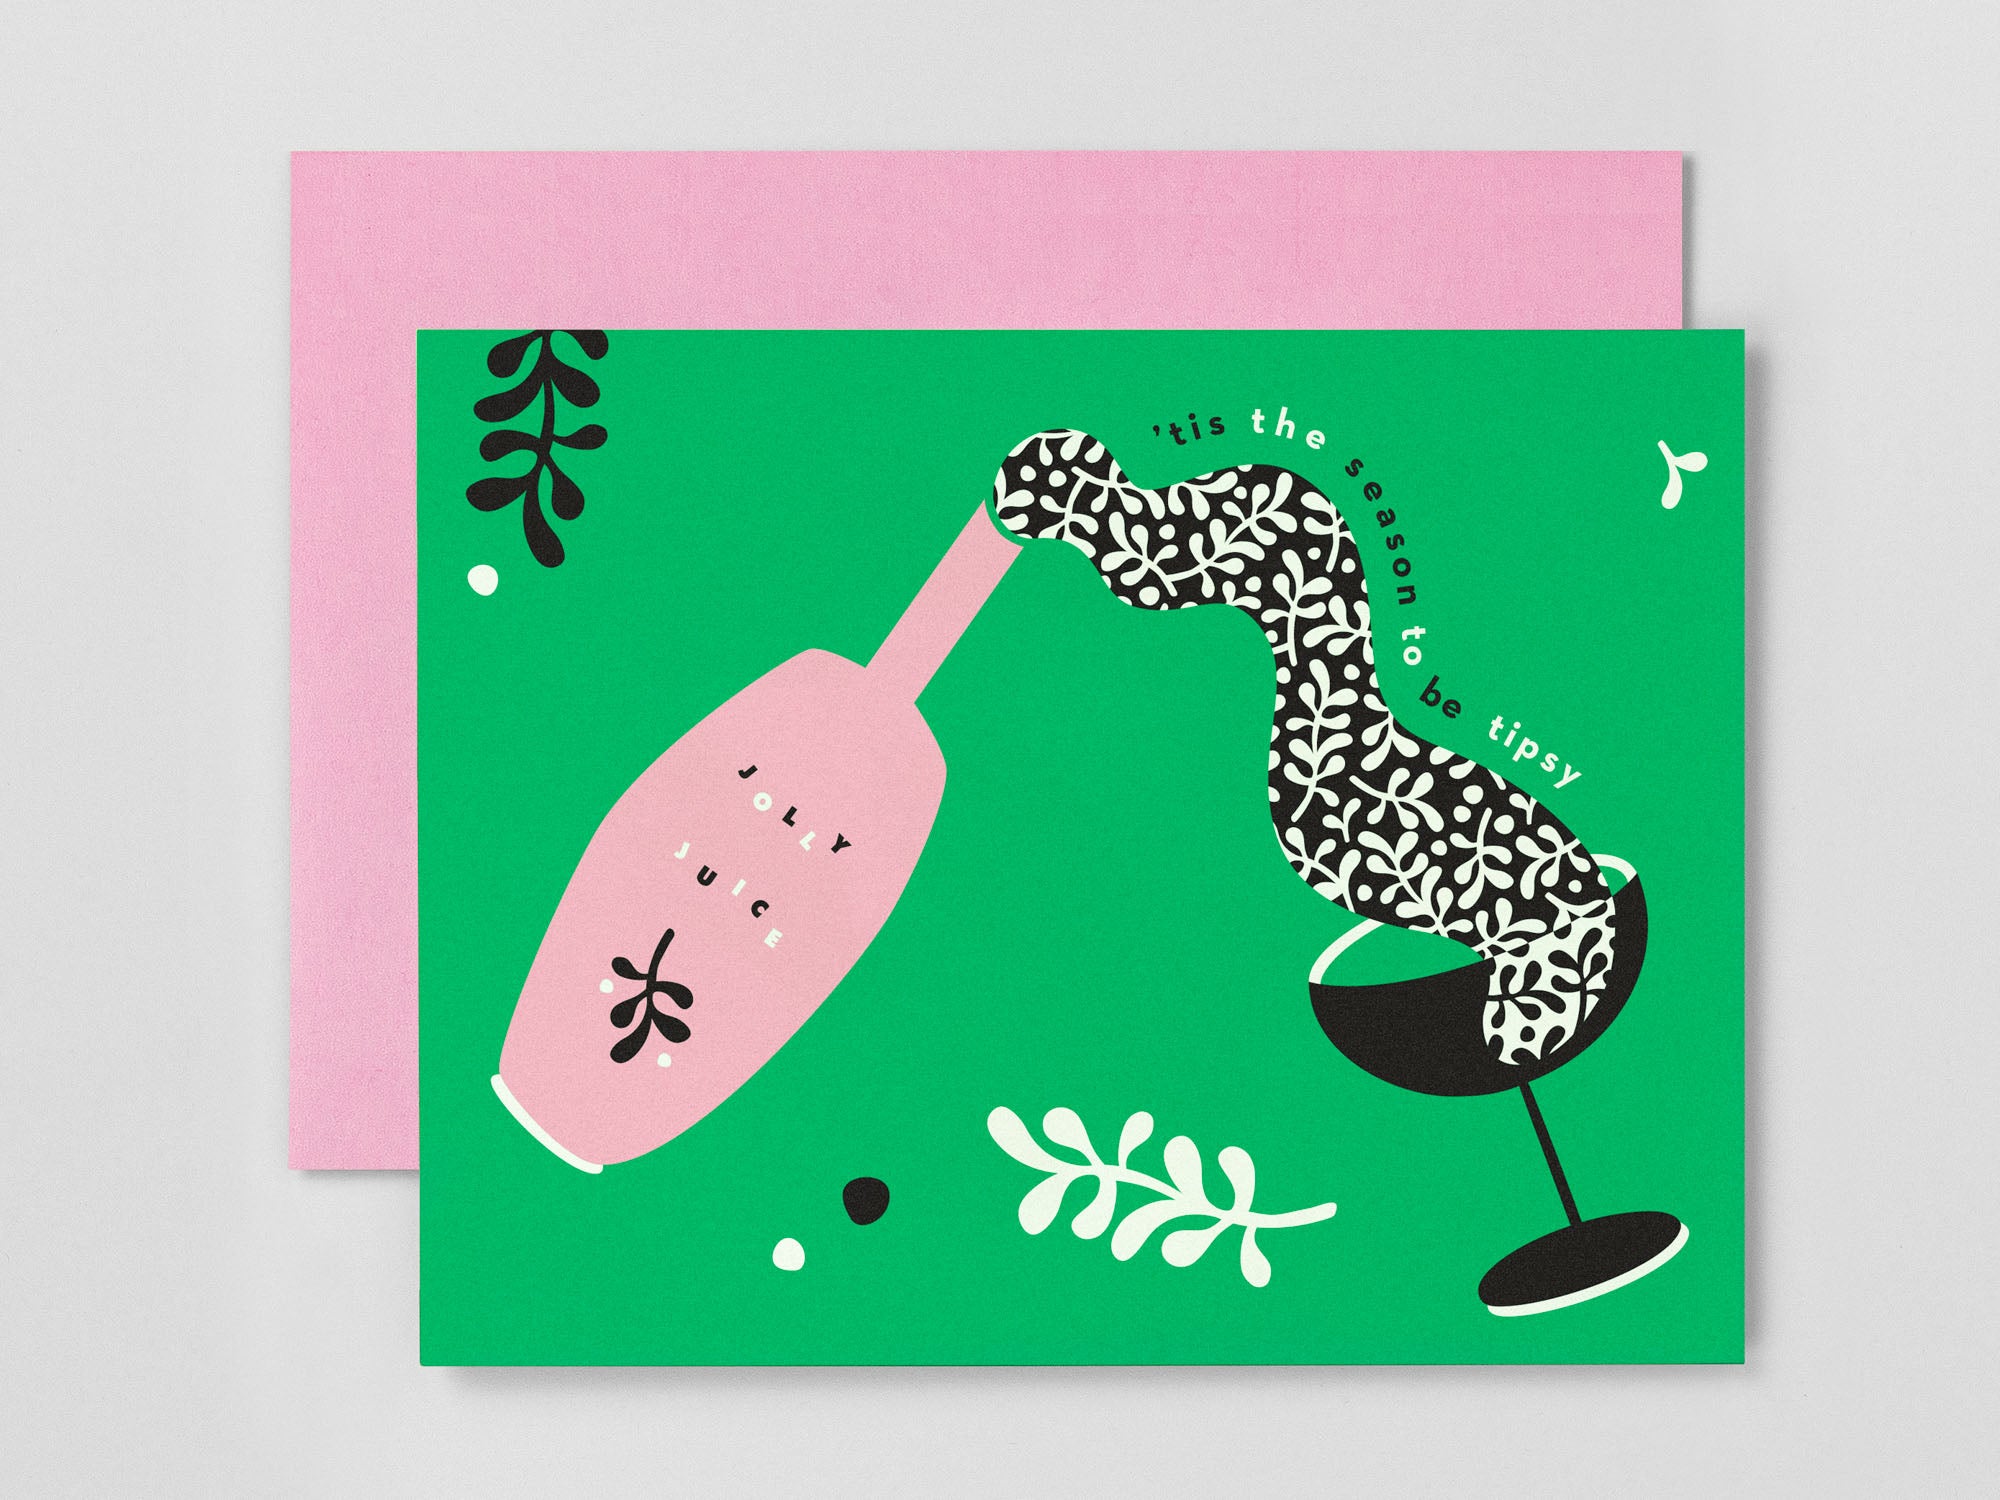 'Tis the Season to Be Tipsy boozy retro mid-century inspired holiday card. Designed by @mydarlin_bk